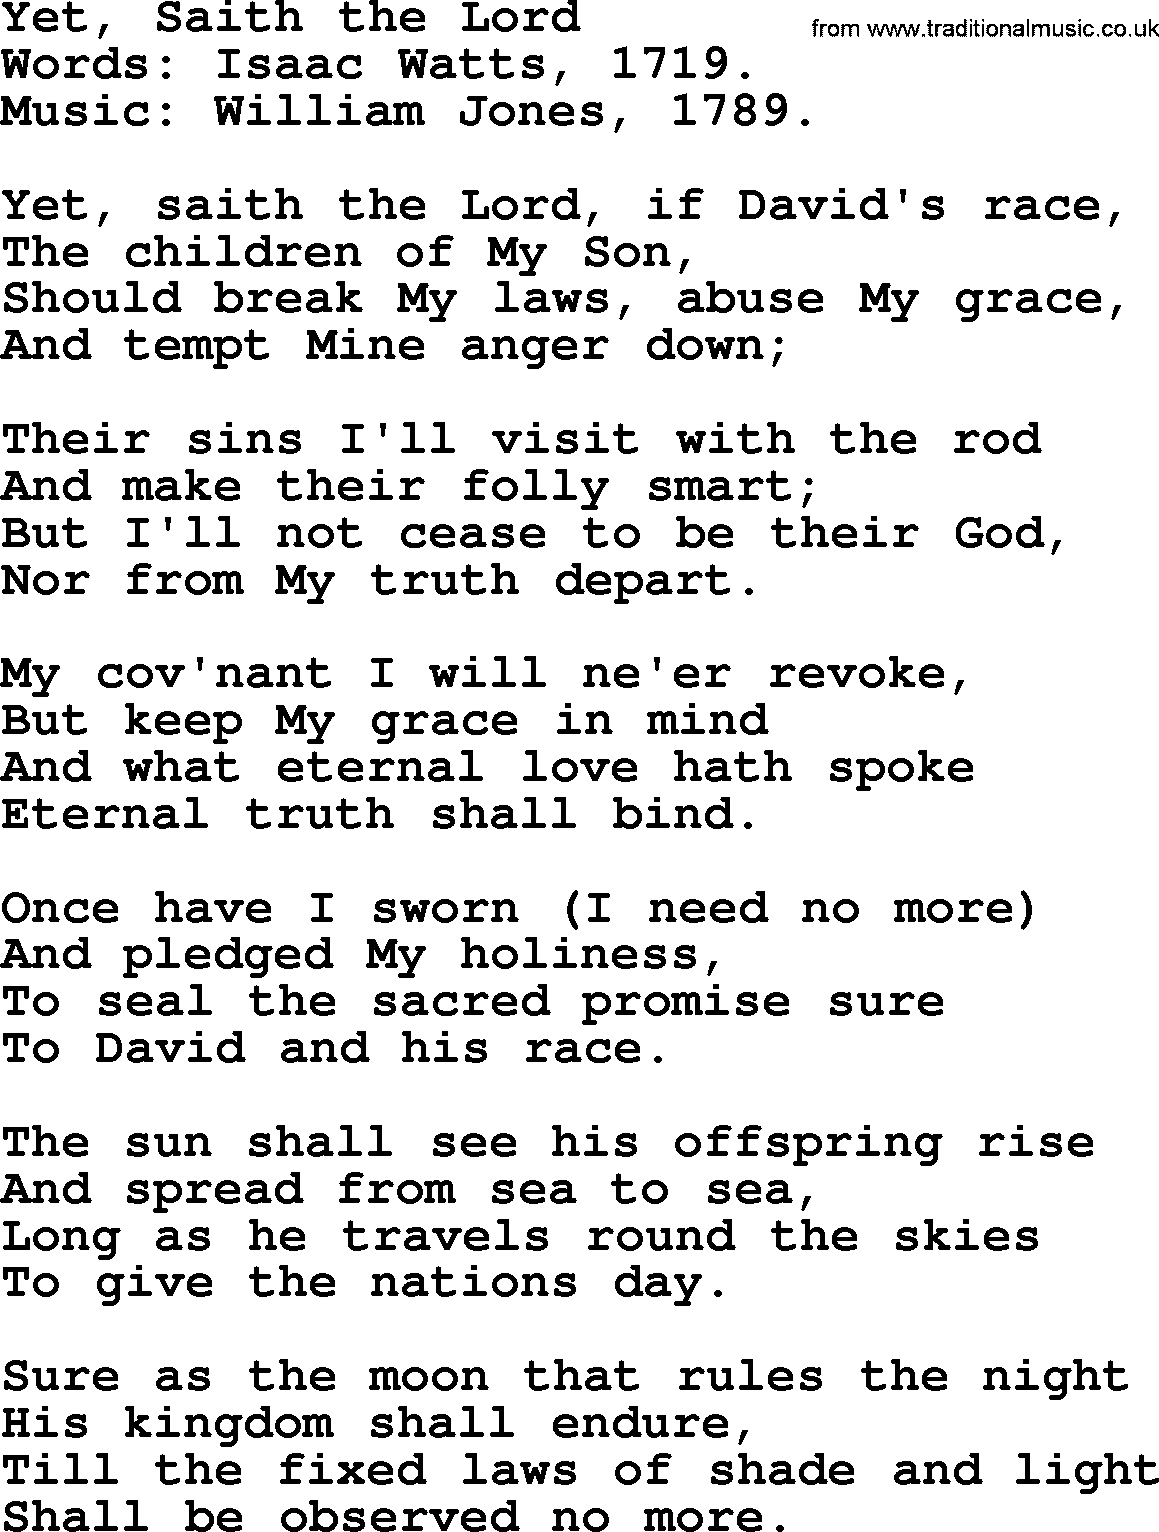 Isaac Watts Christian hymn: Yet, Saith the Lord- lyricss